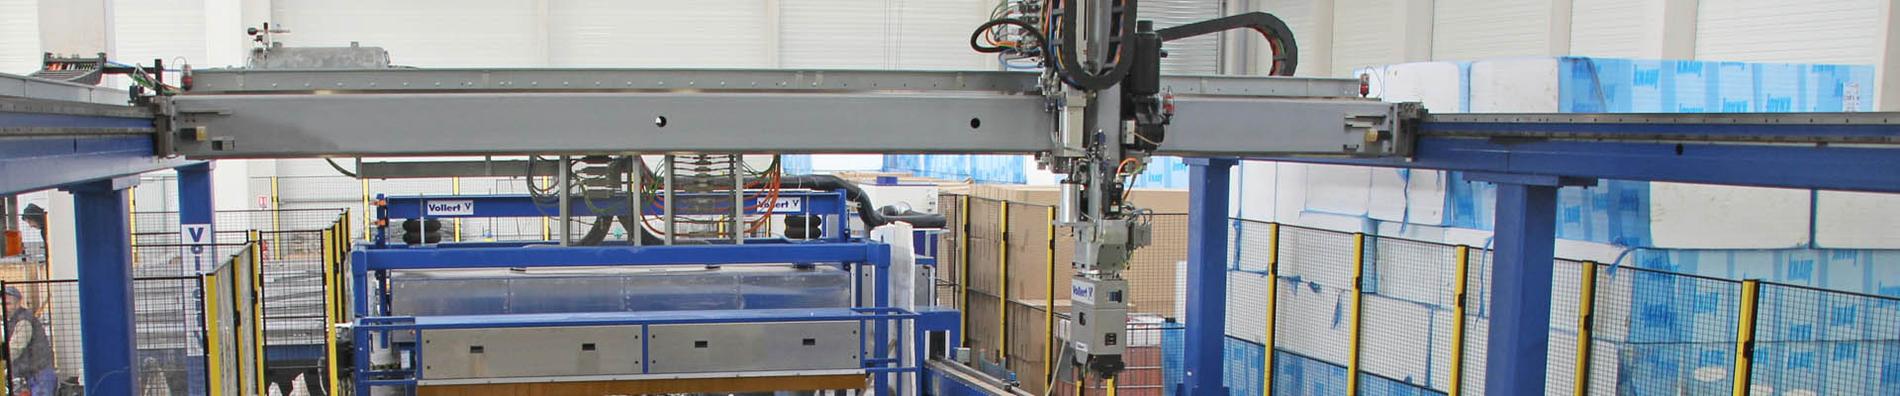 Automatisierte Produktion bedarf eines Fertigungsleitsystems, Fertigungssteuerung, Produktionsautomatik, Robotik